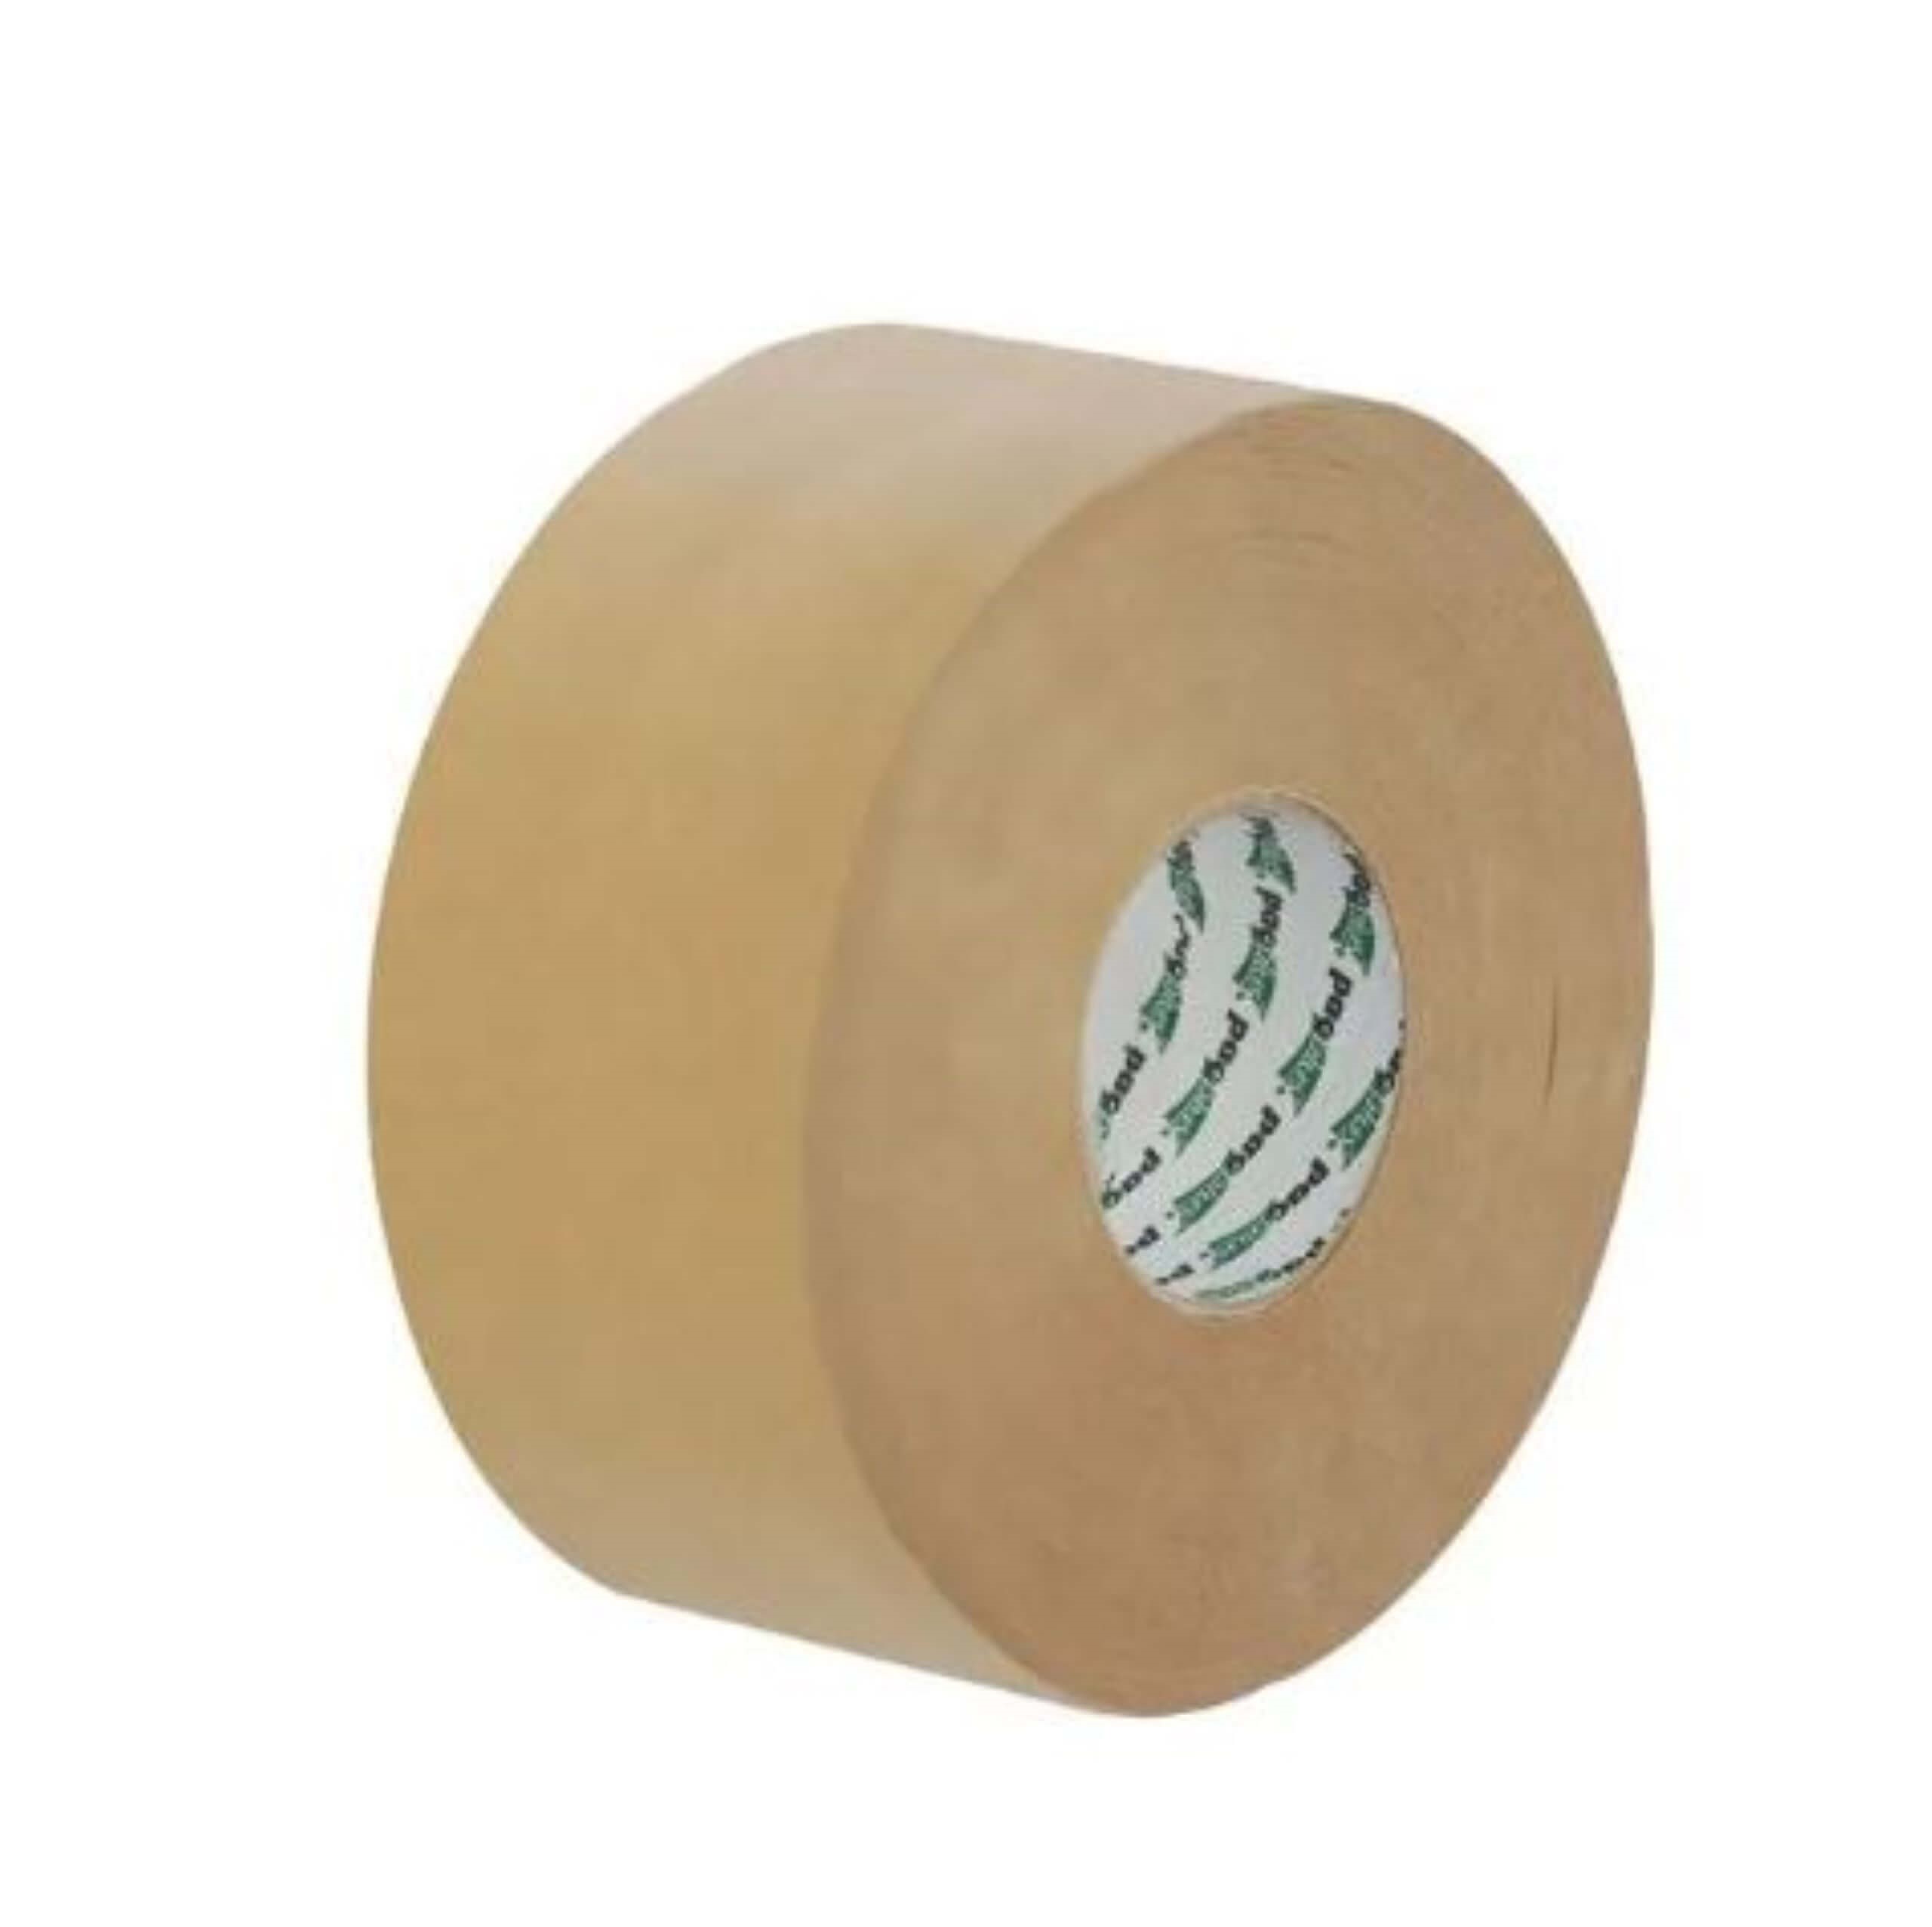 An image of gummed kraft paper tape.